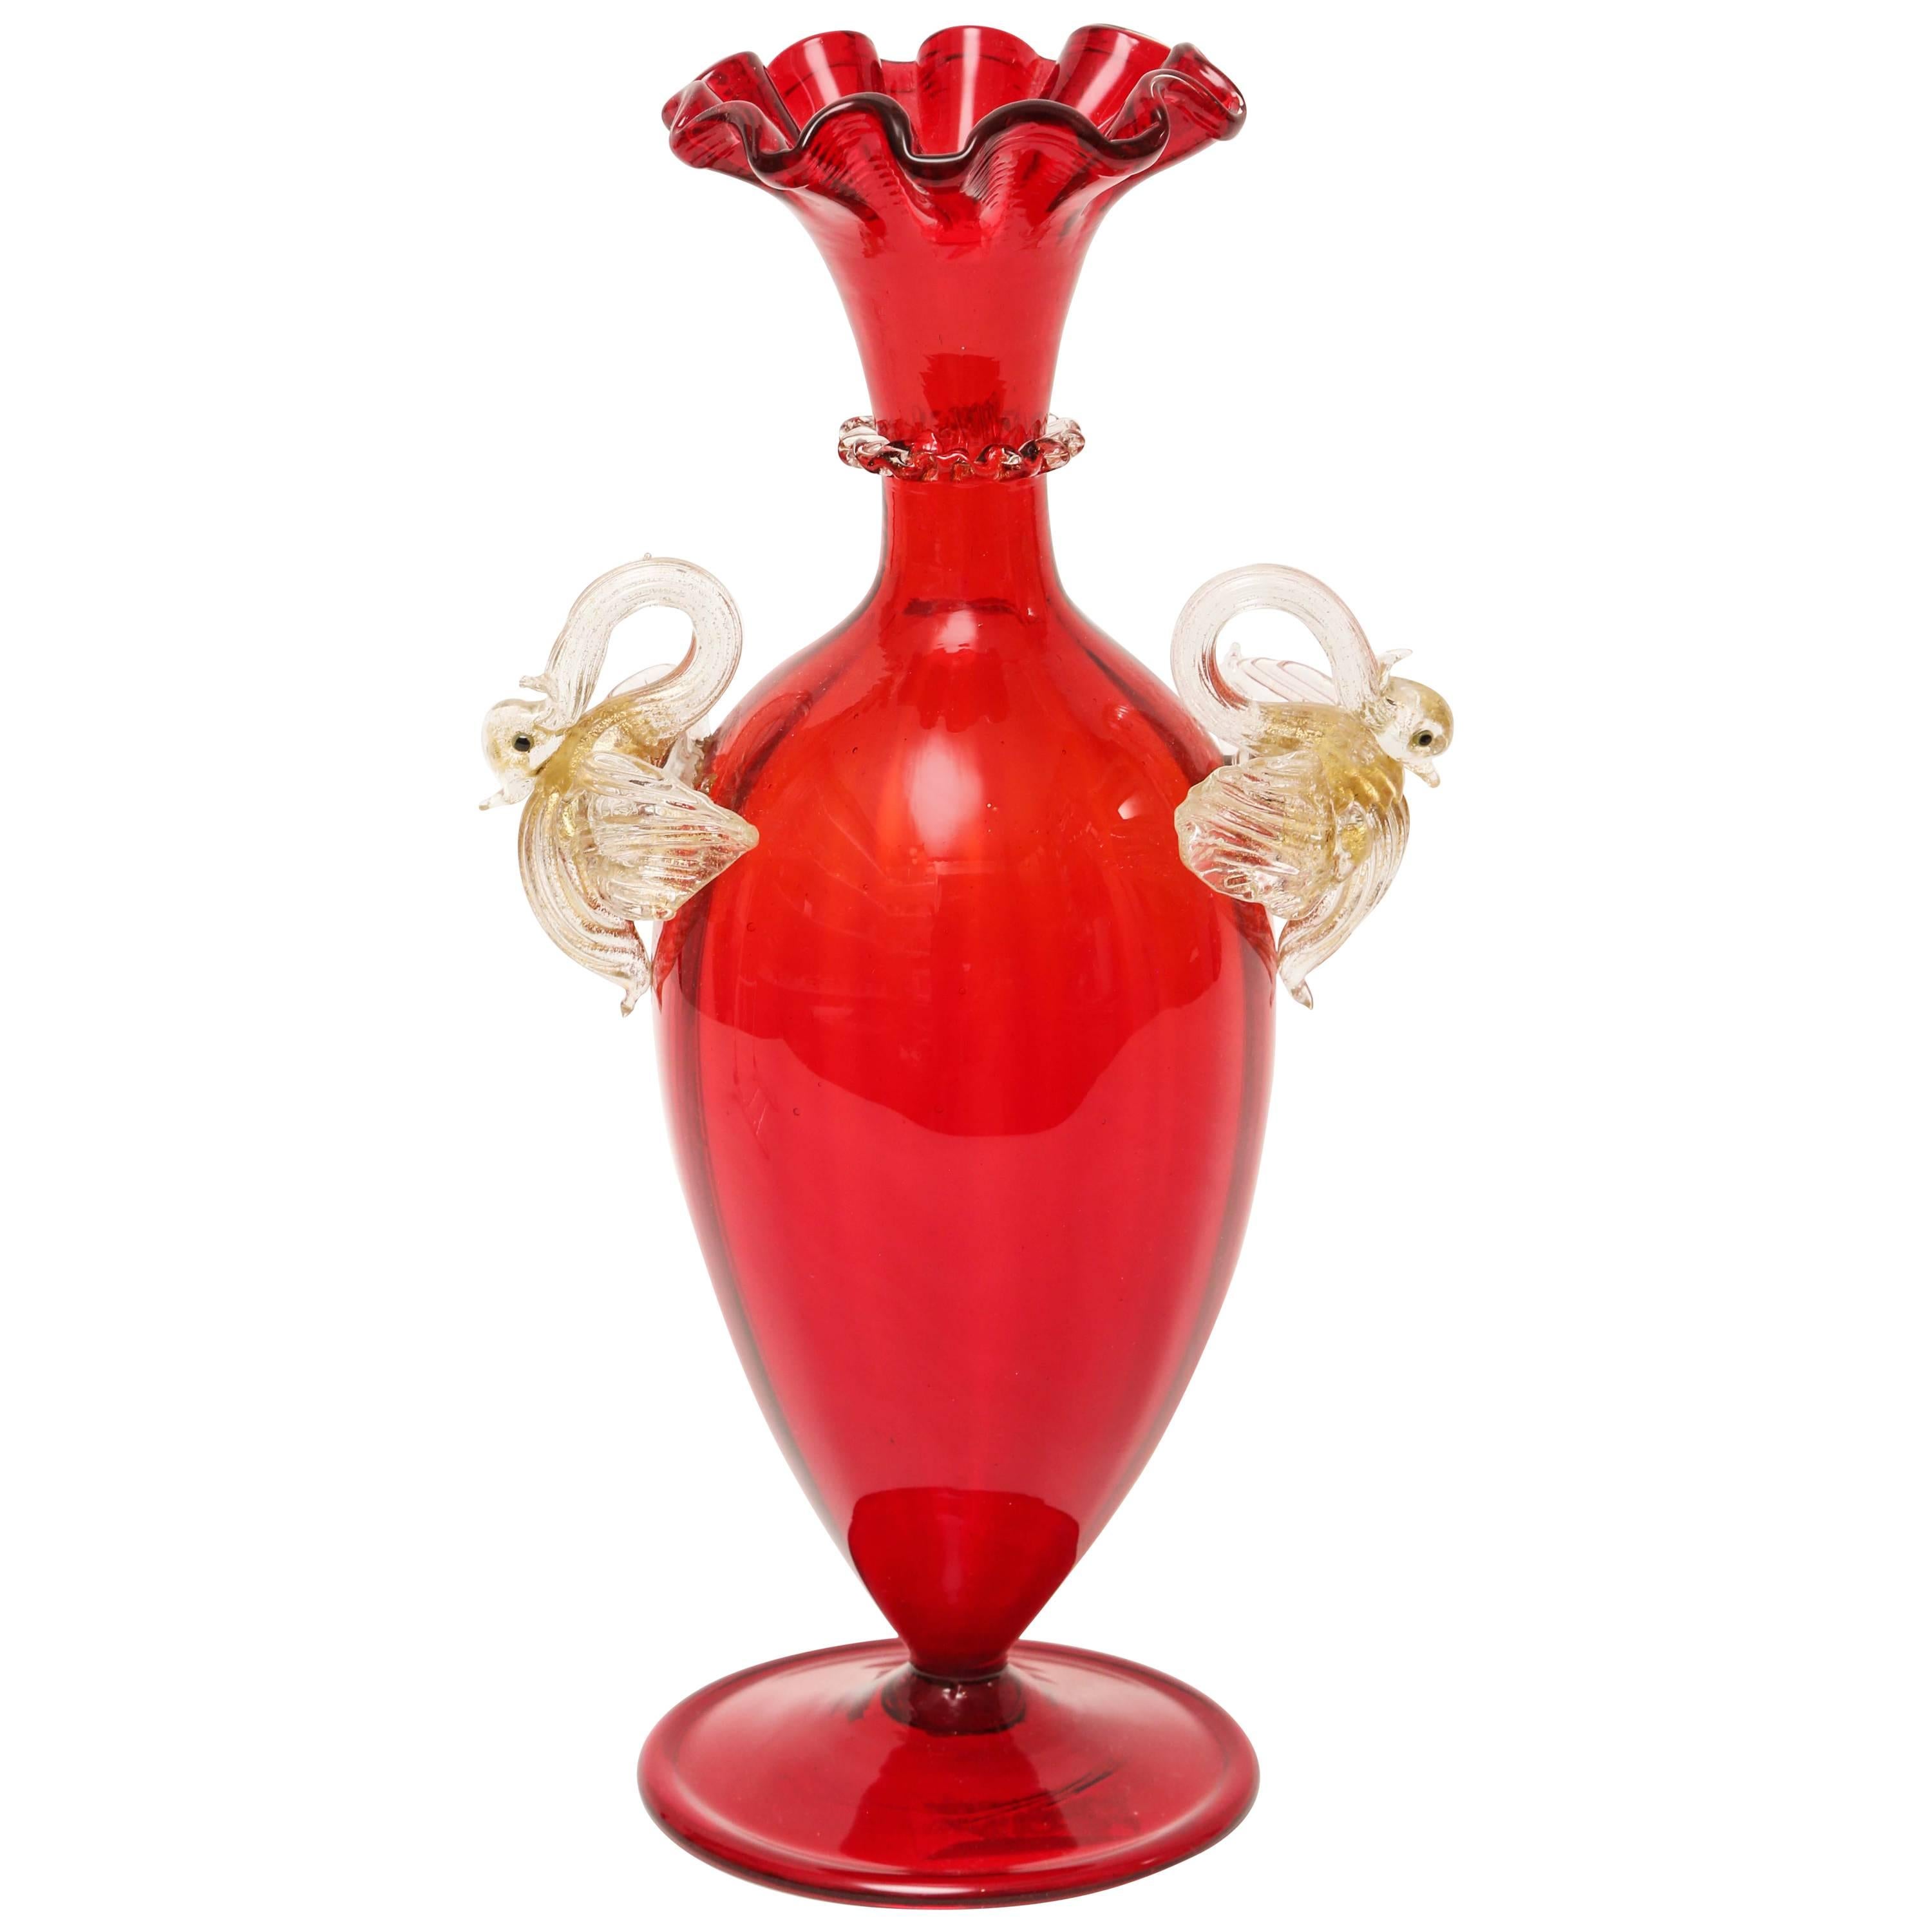 Stunning Red Venetian Vase with Double Swan Handles, 24-Karat Gold Inclusion